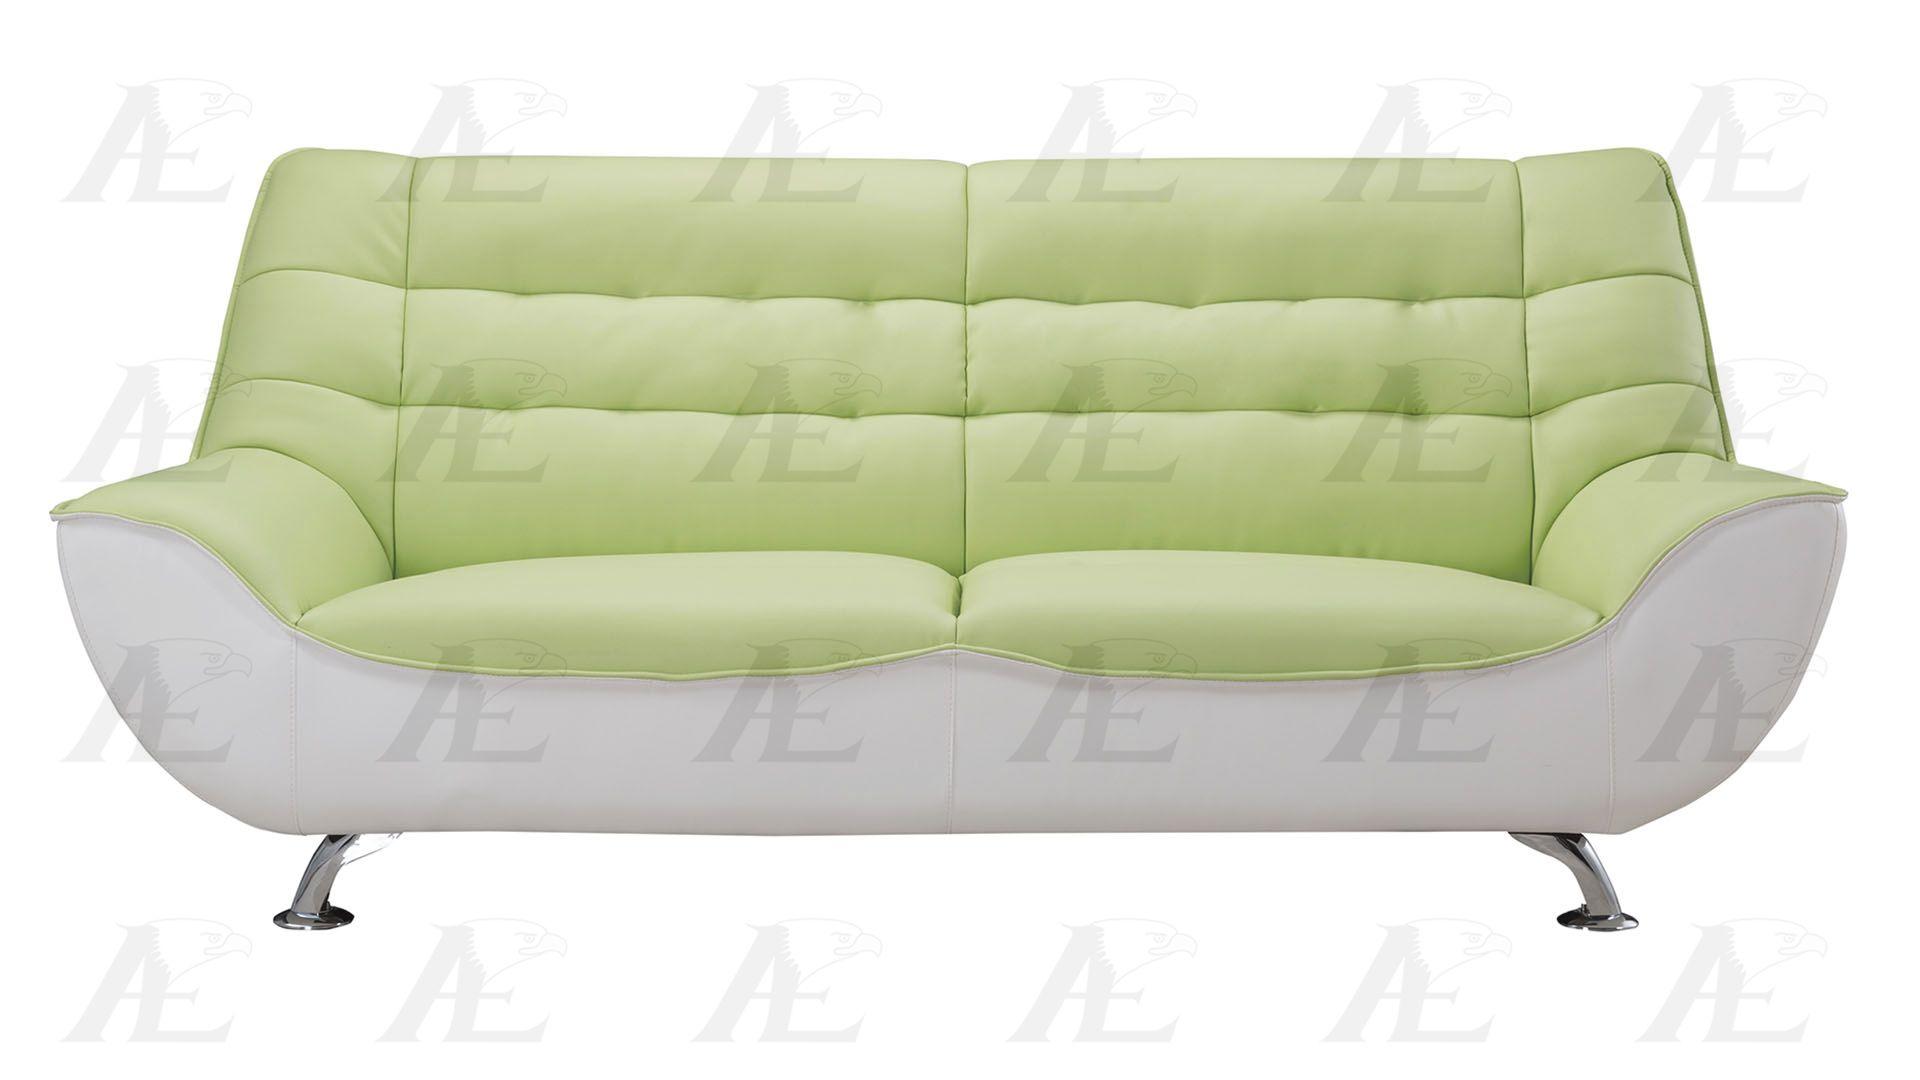 American Eagle Furniture AE612-GN.W Sofa